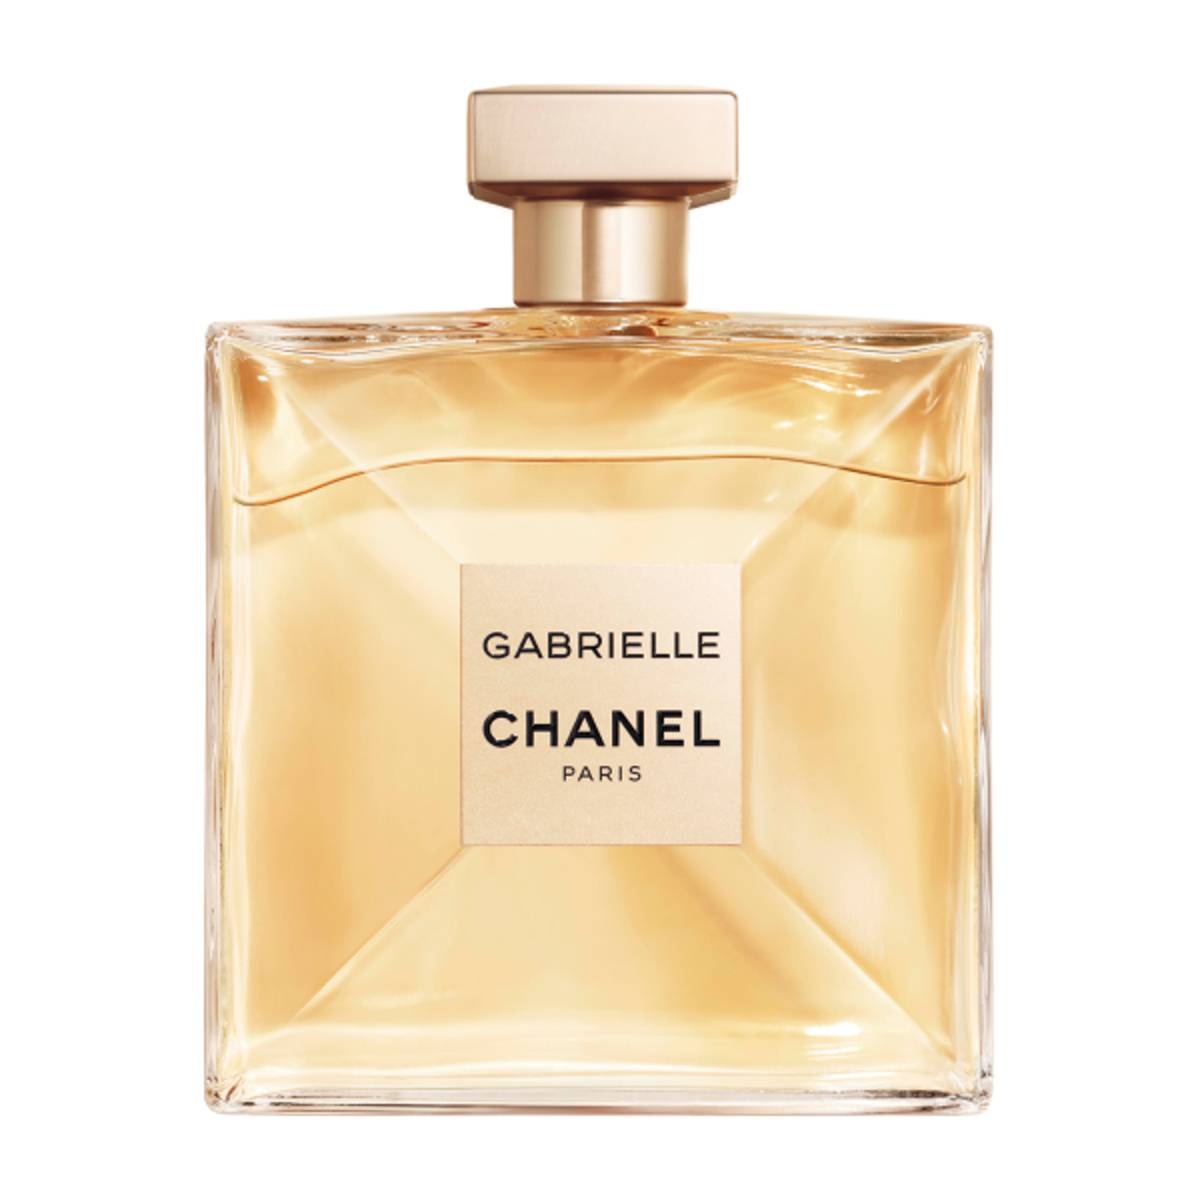  Chanel Gabrielle Eau de Parfum je floralna nota koja se pamti. 